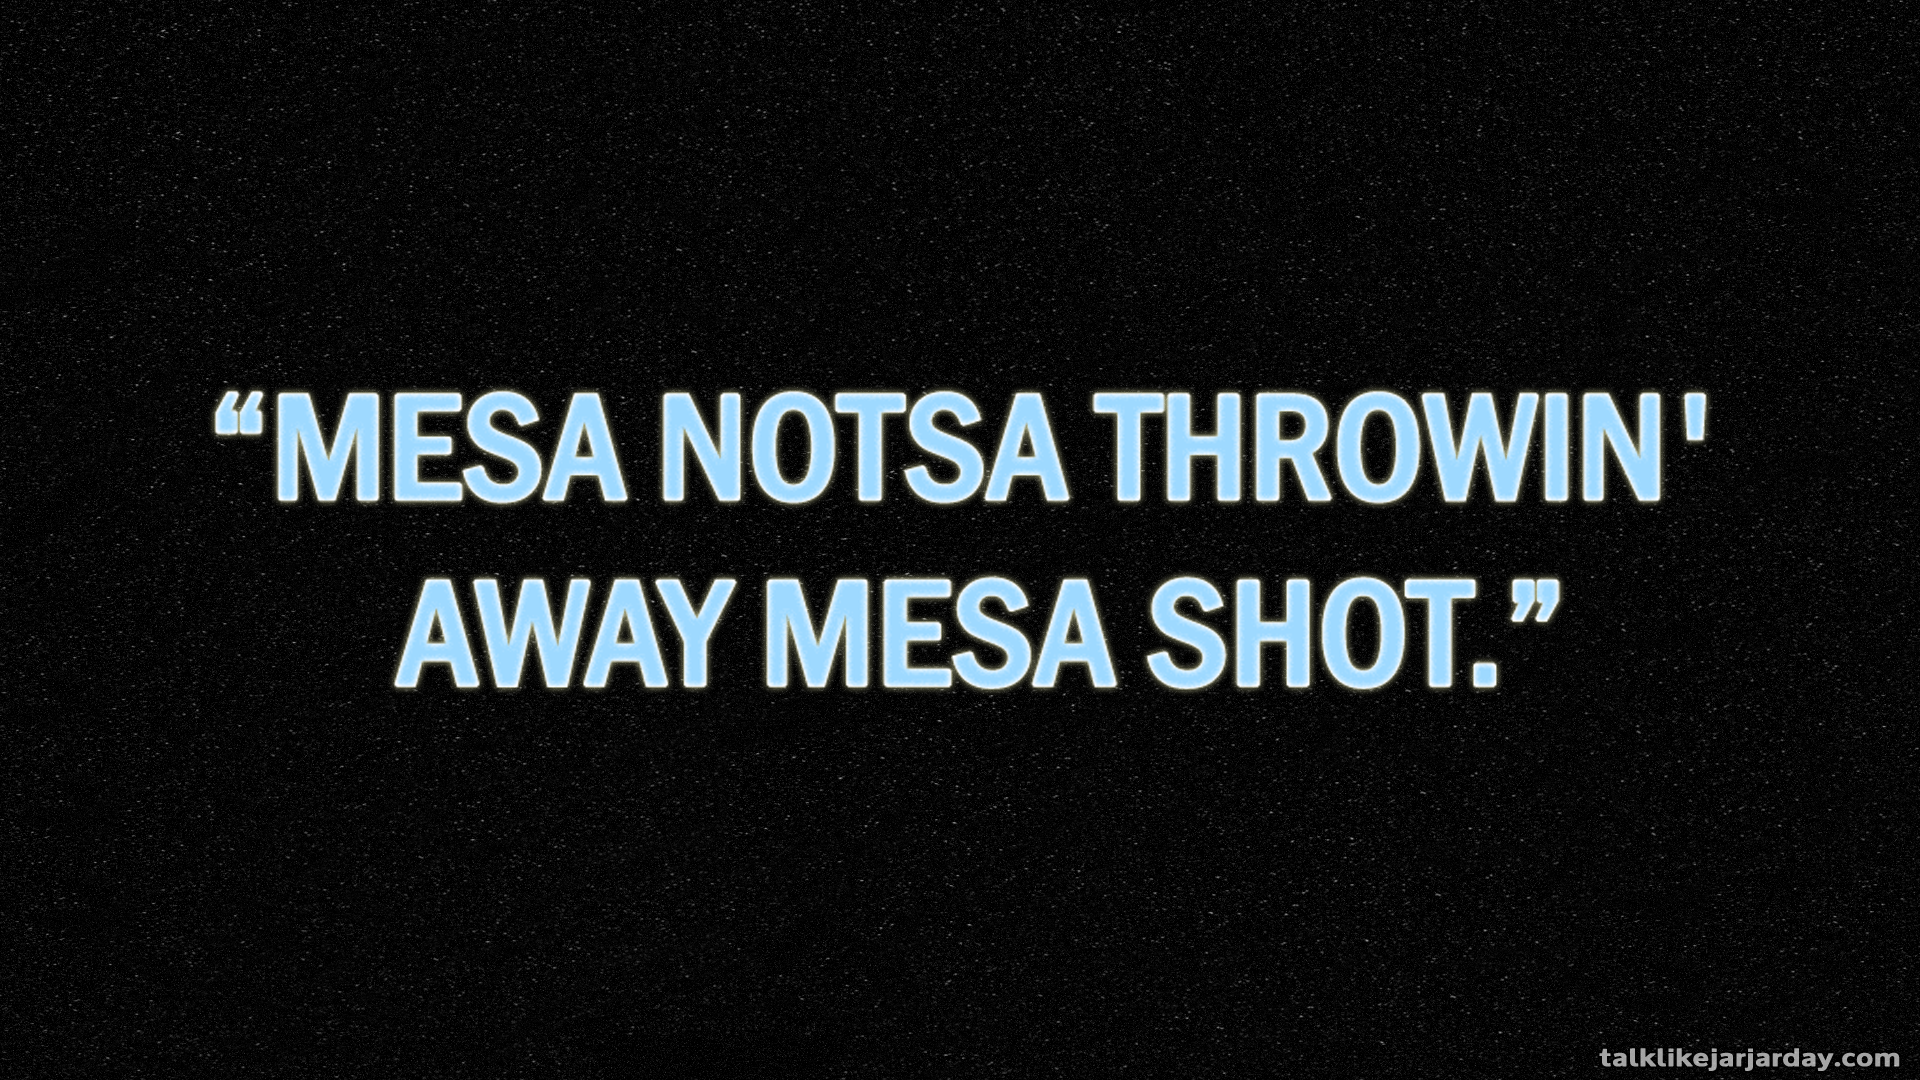 Mesa notsa throwin
away mesa shot.